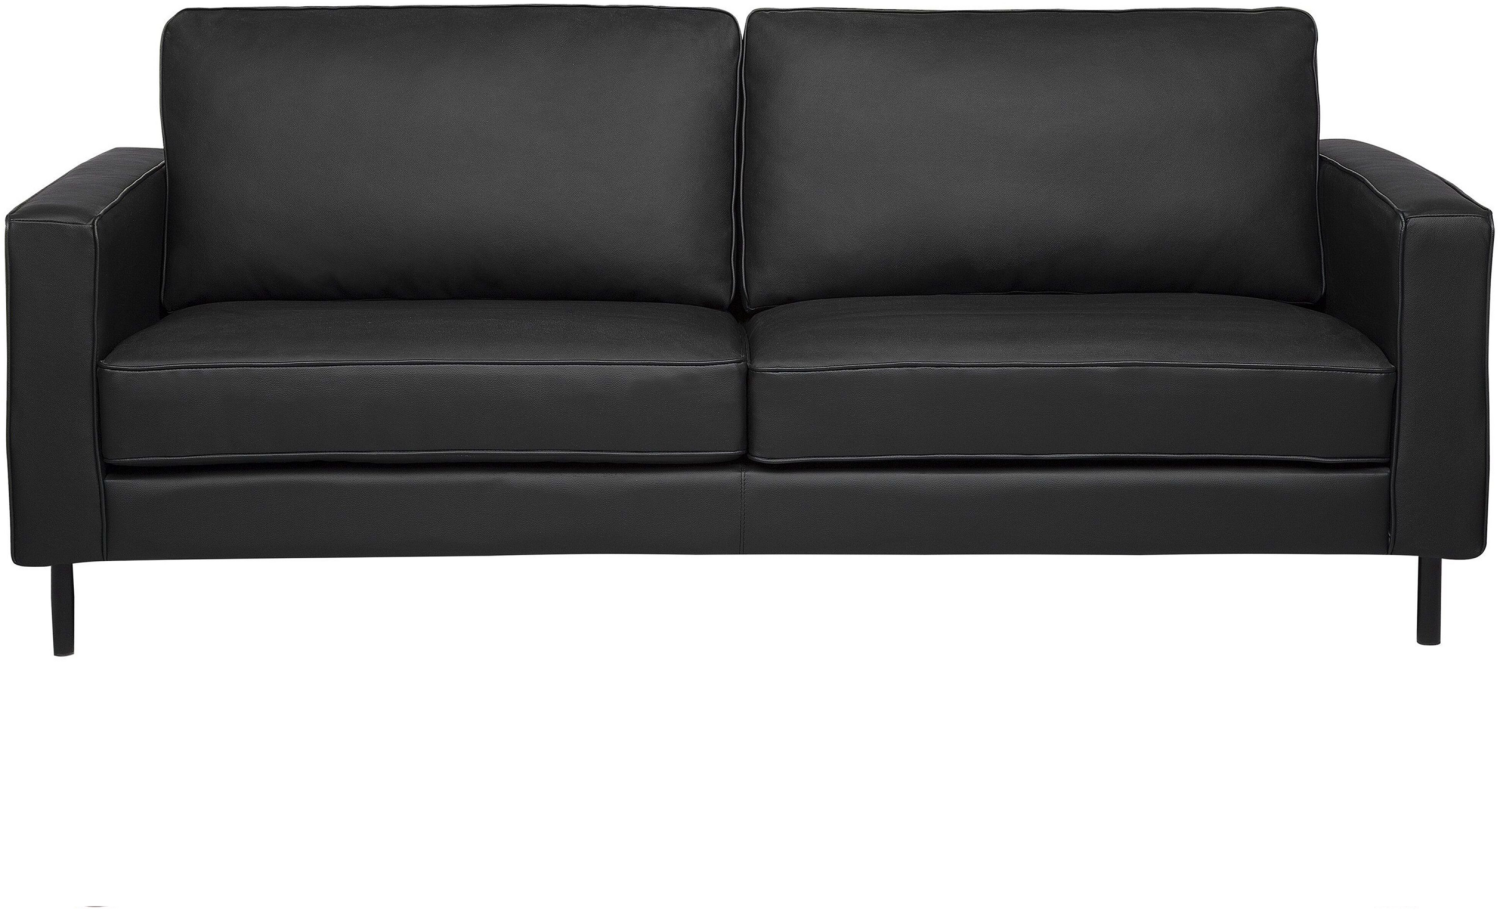 3-Sitzer Sofa Leder schwarz SAVALEN Bild 1